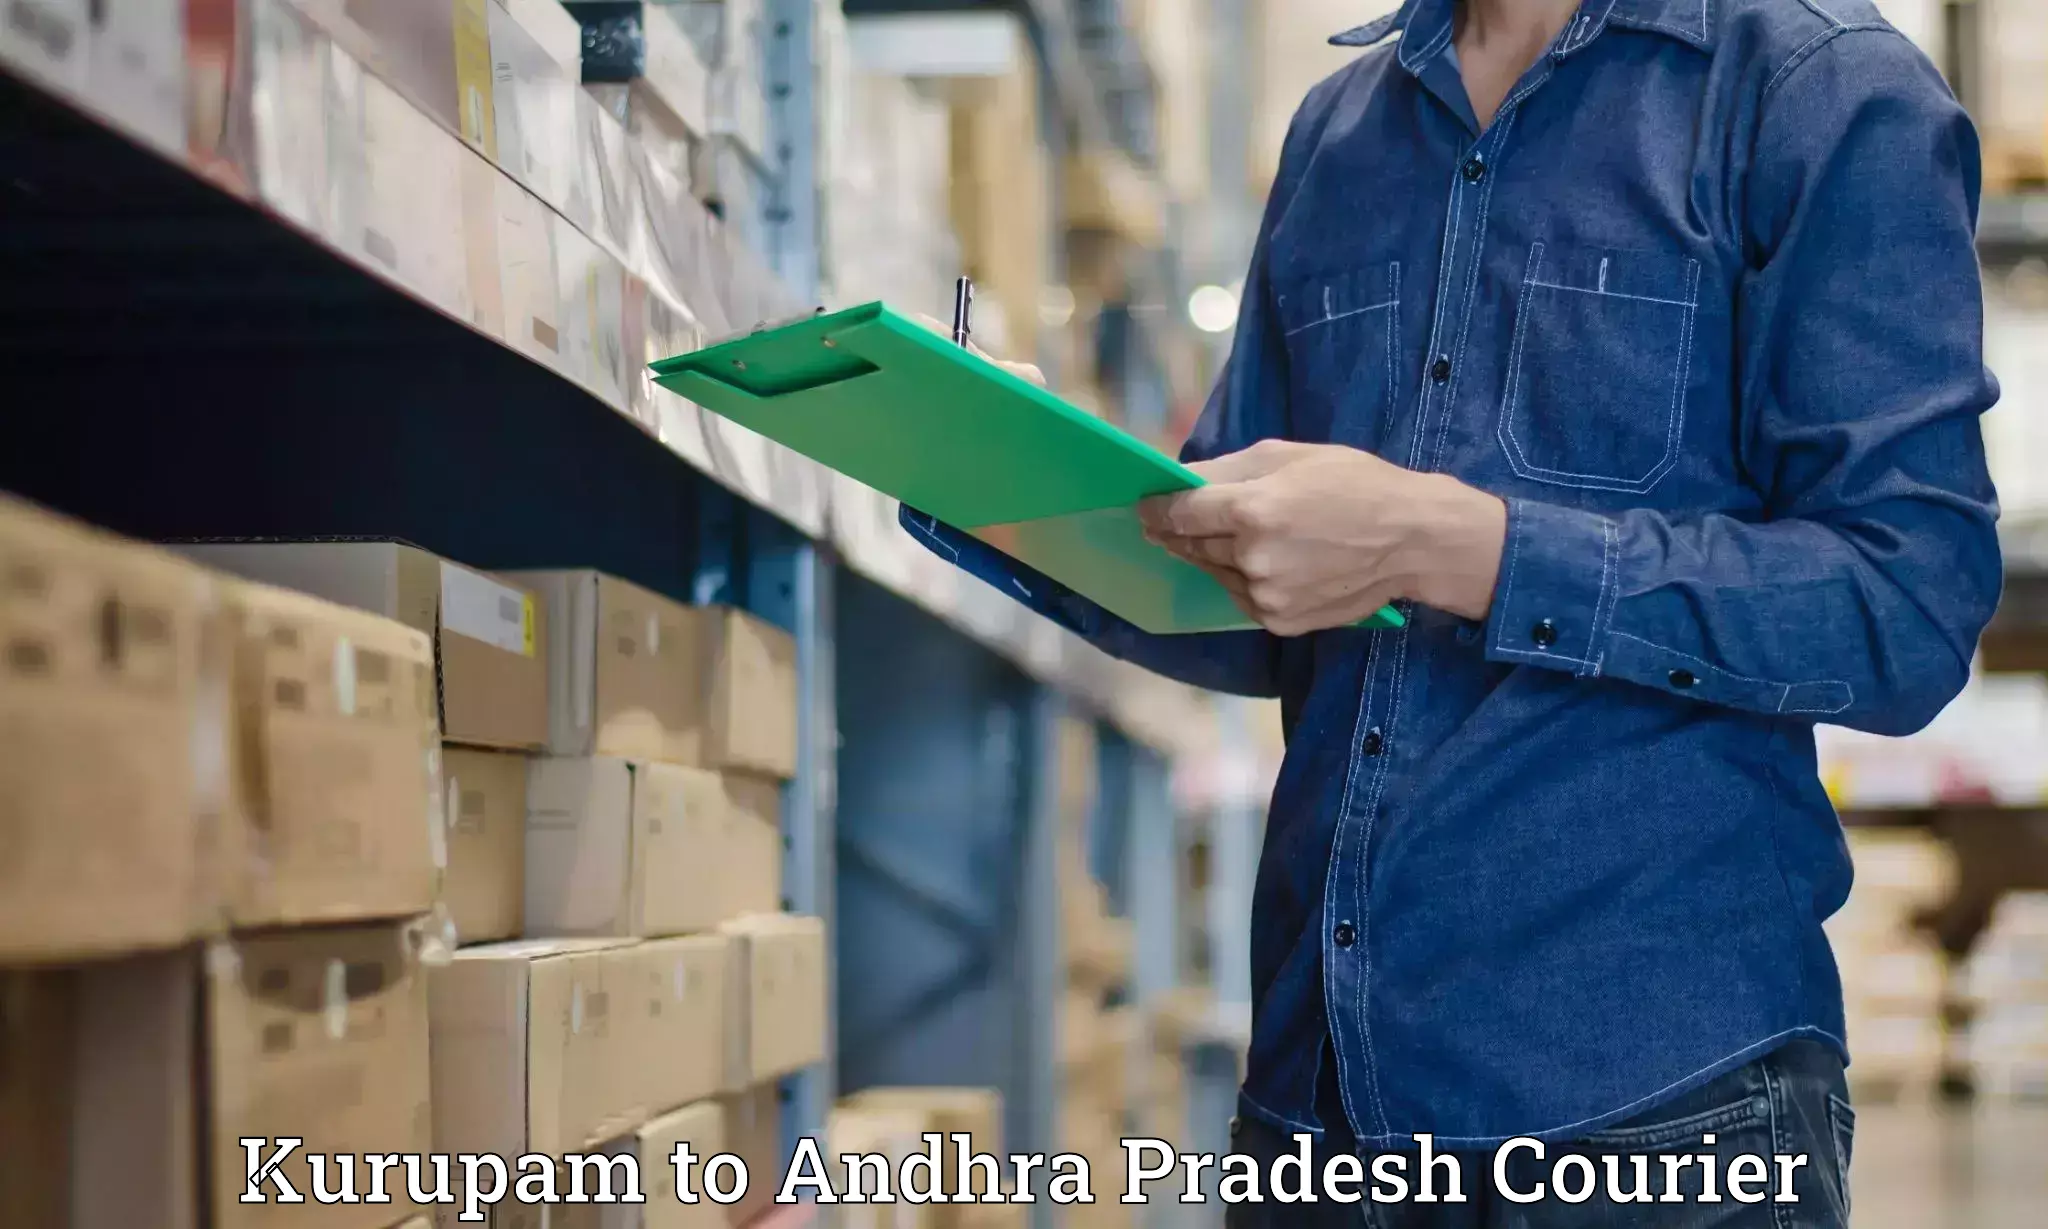 Customer-focused courier Kurupam to Dhone